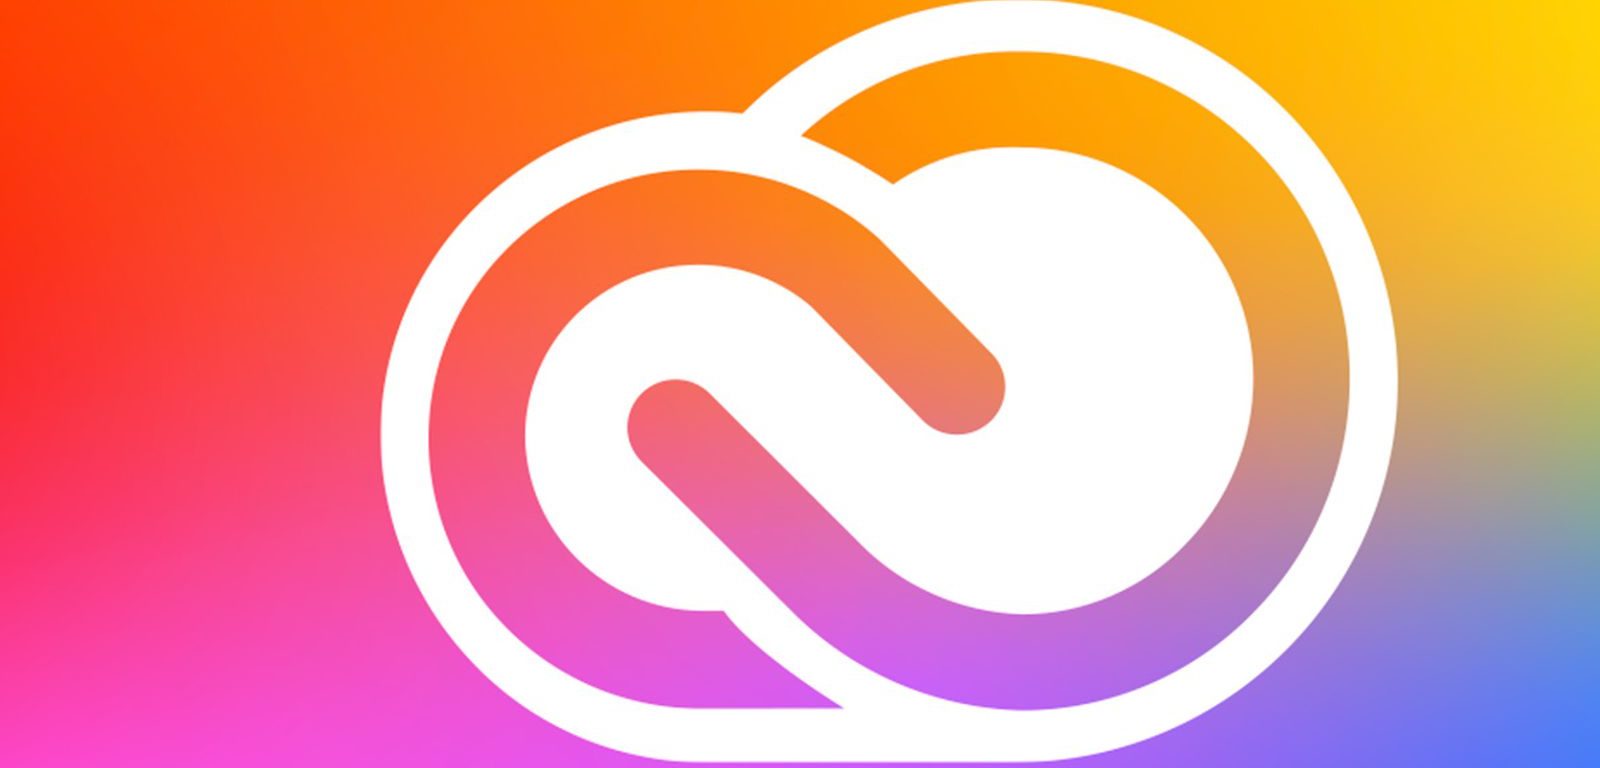 adobe creative cloud logo png